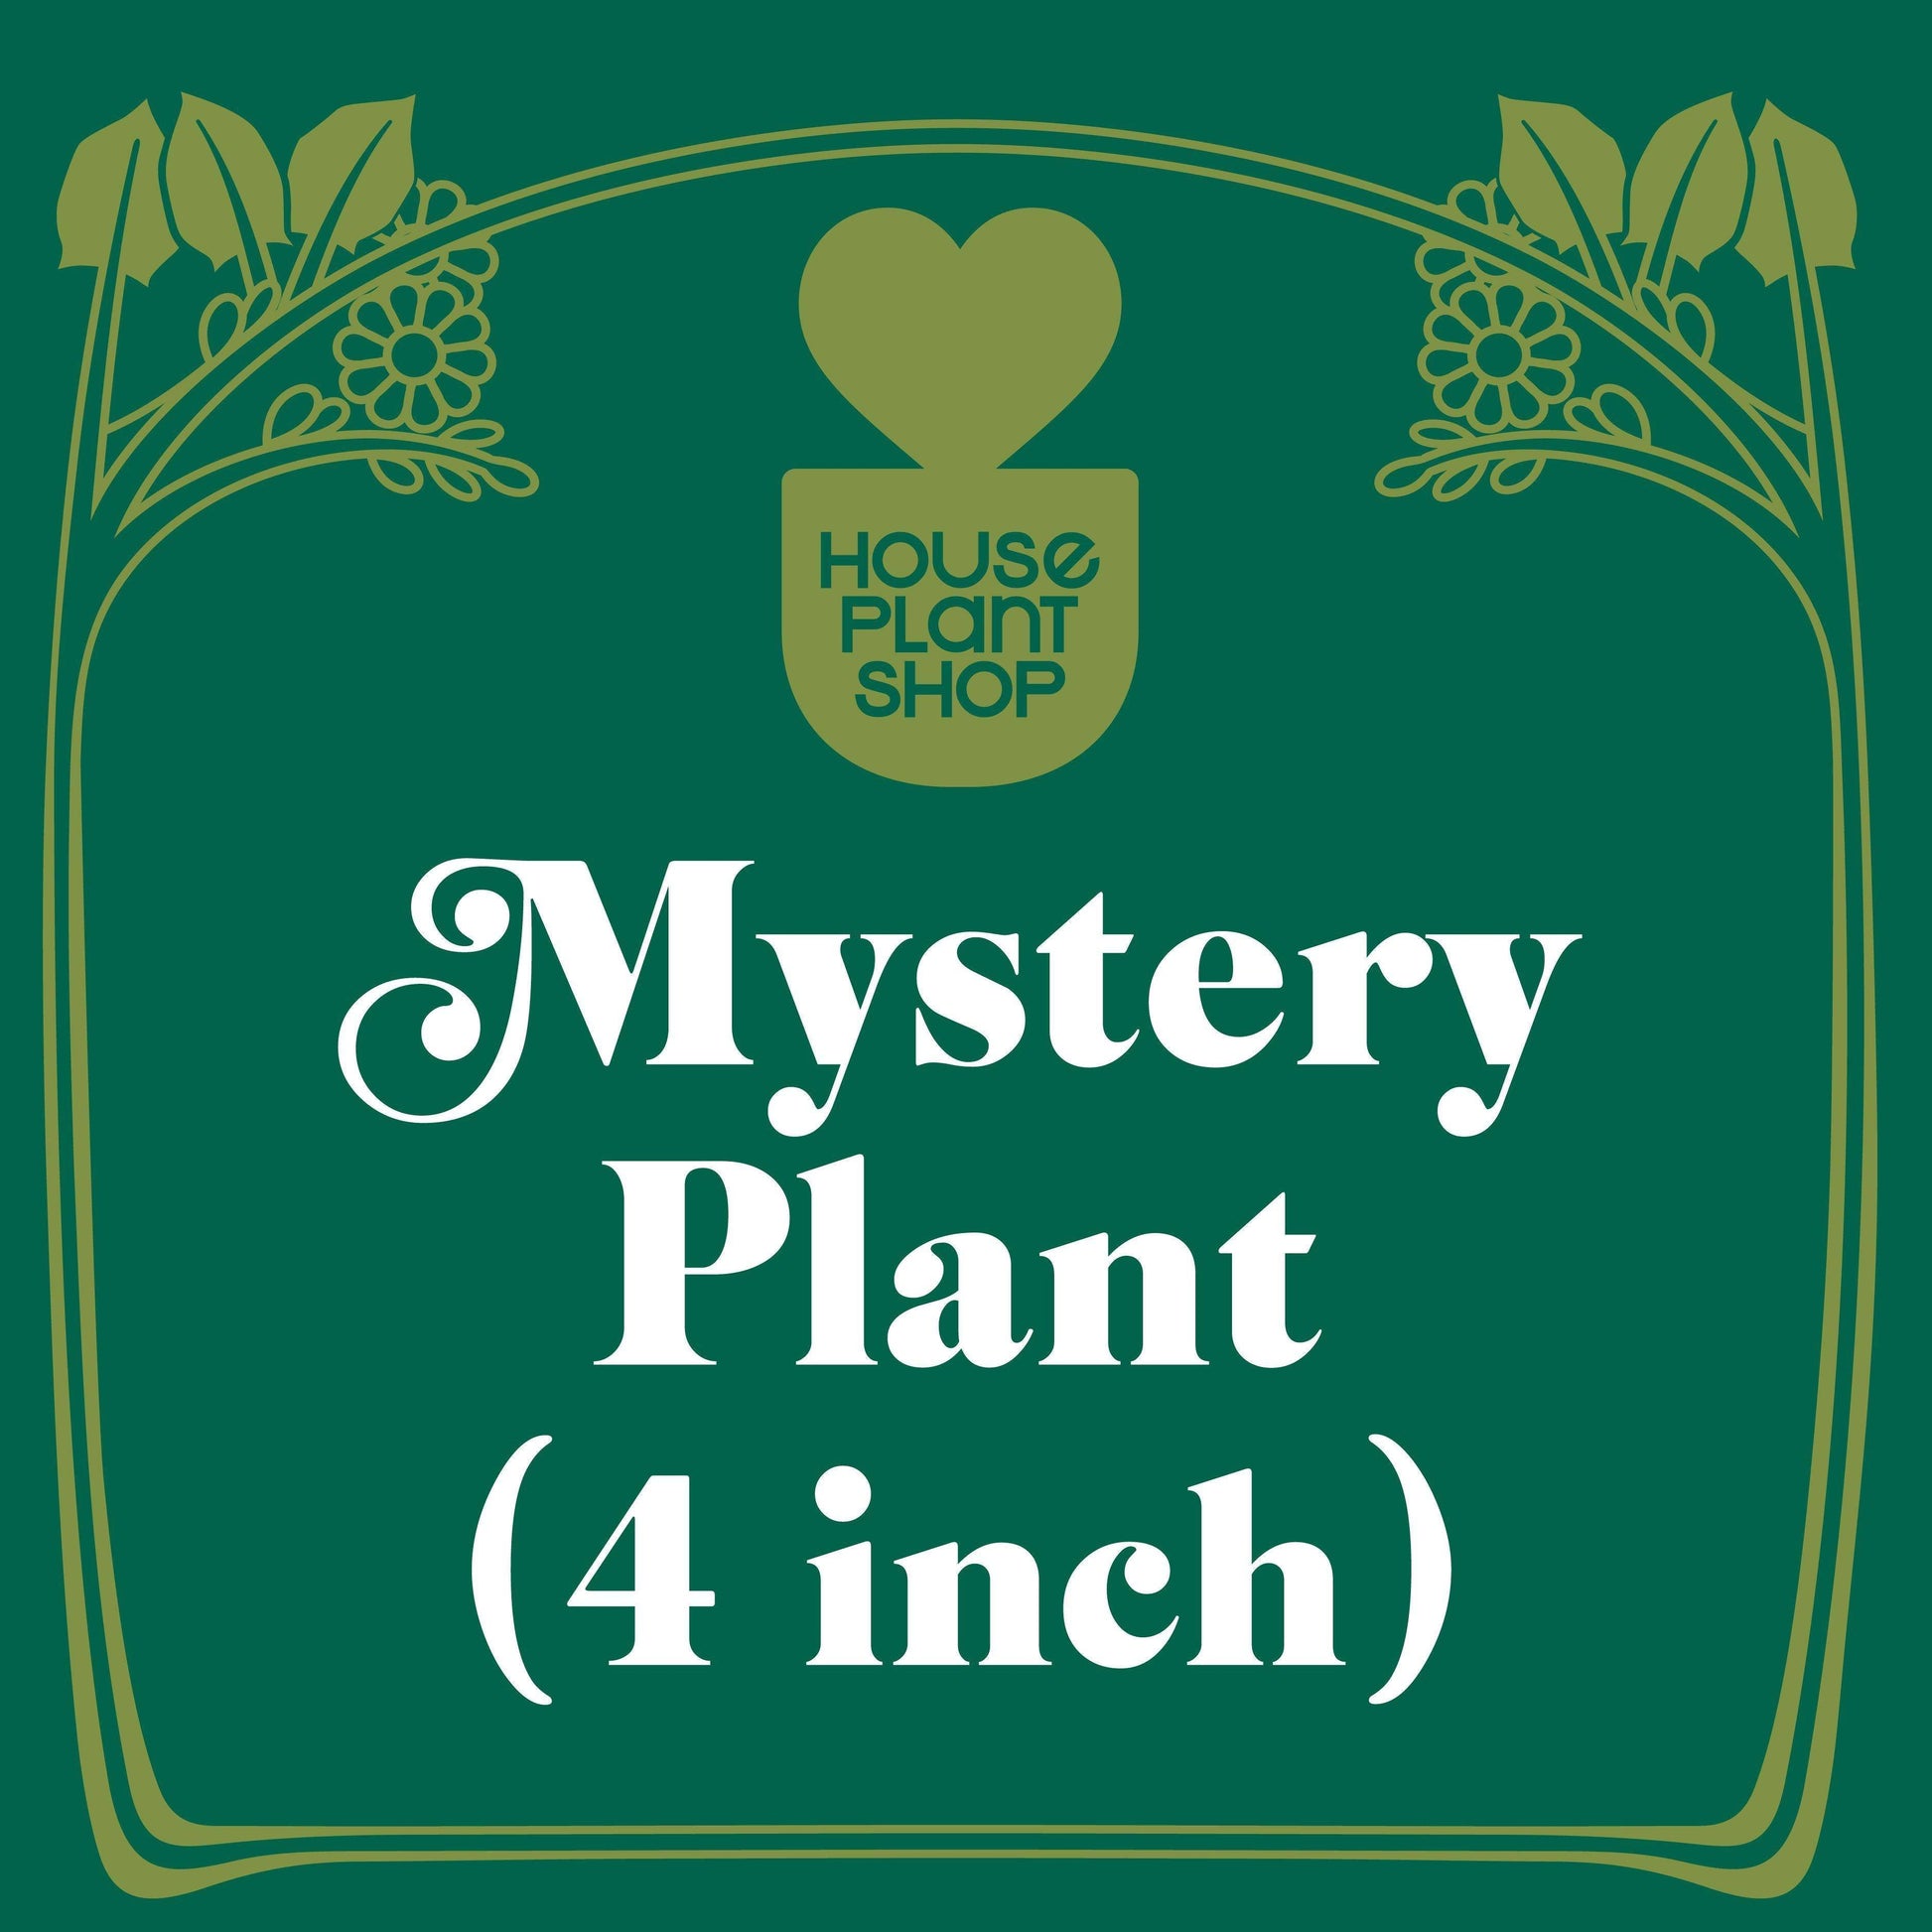 Mystery Flowering Plant - Plantonio